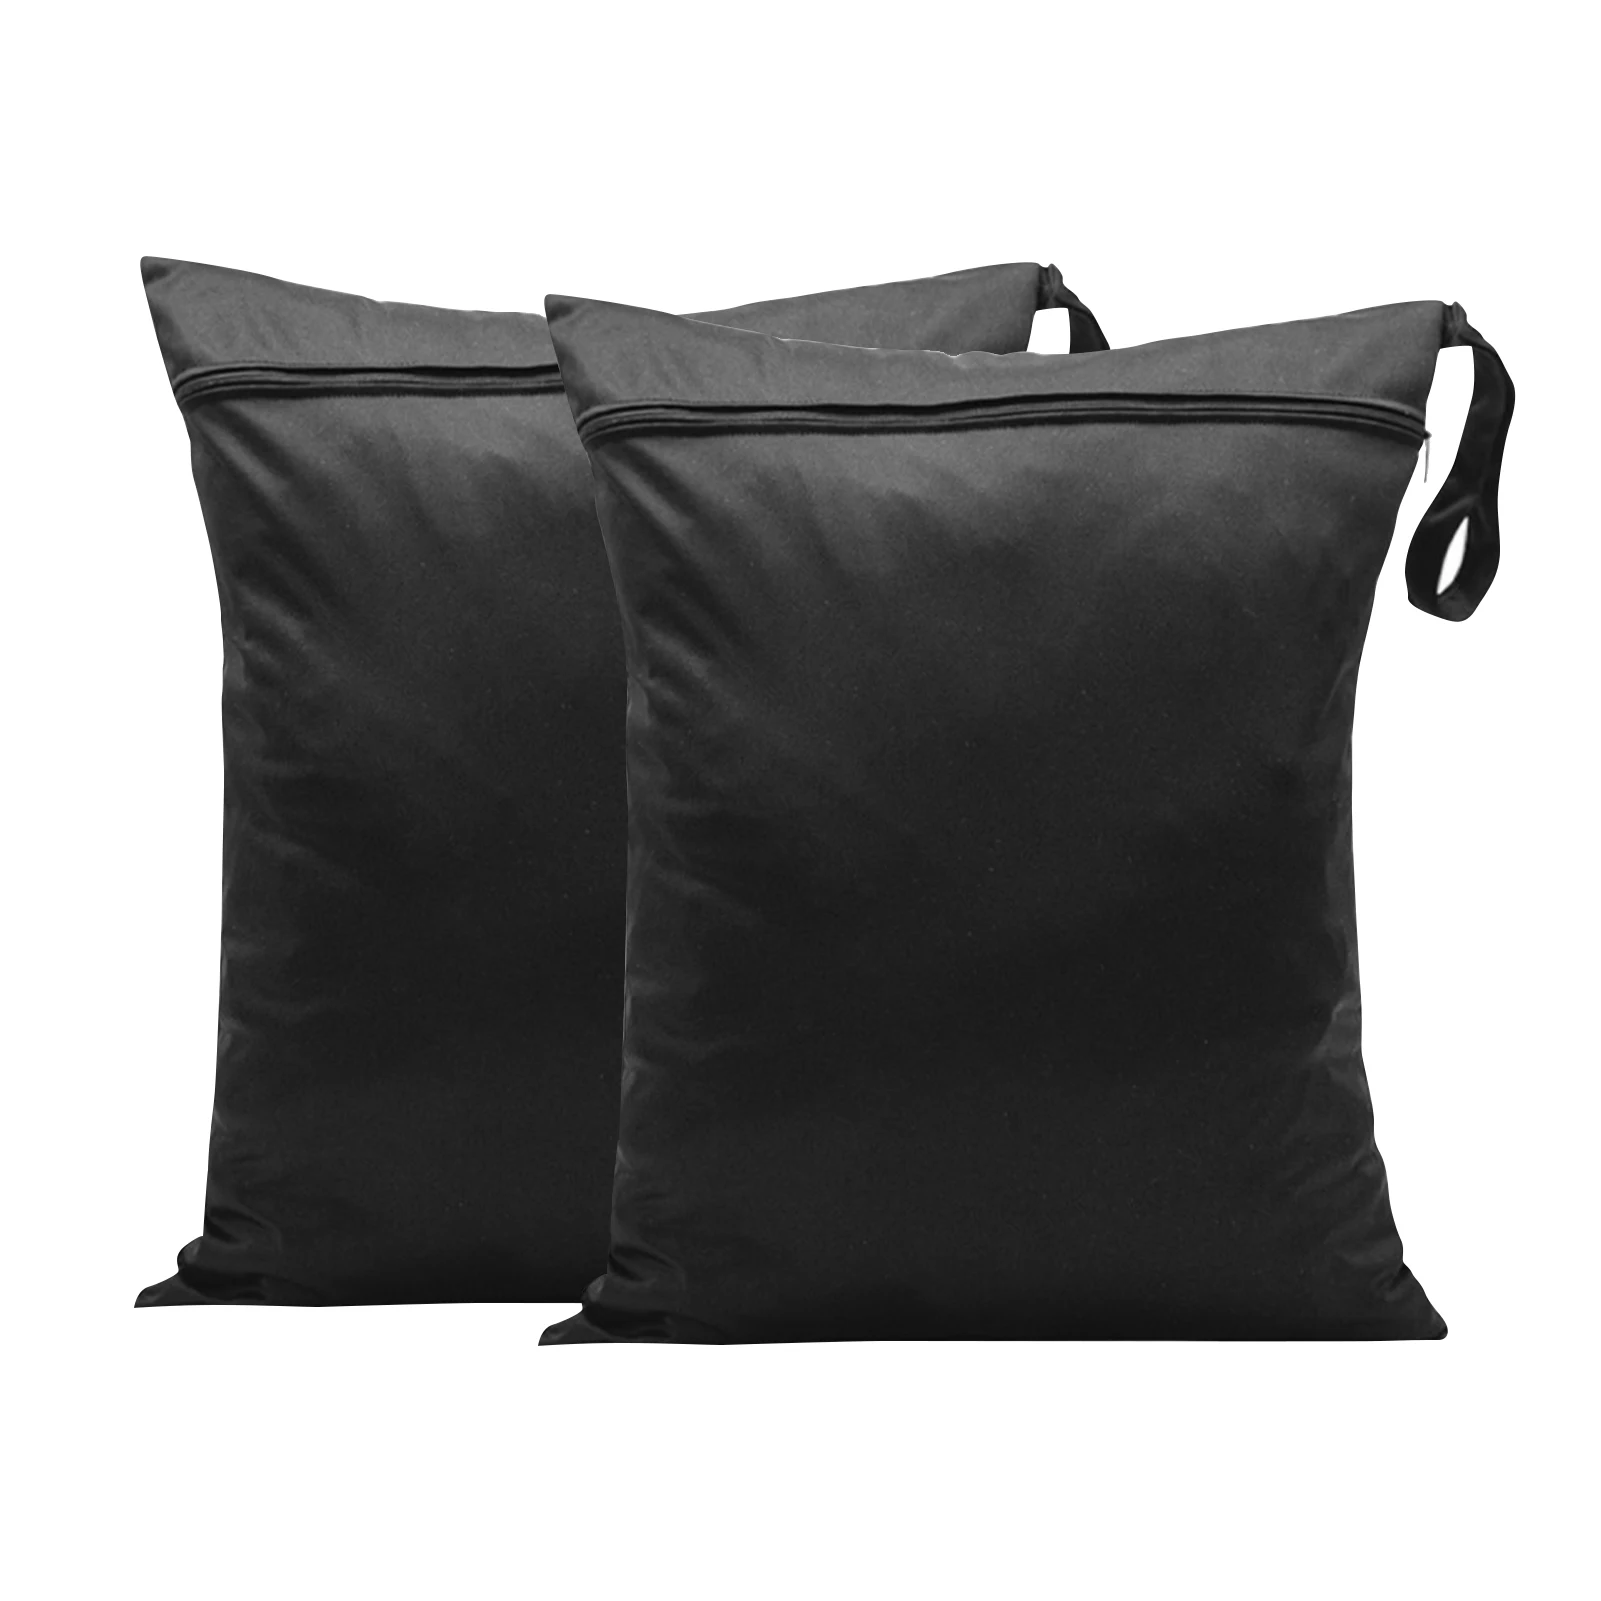 

2pcs Washable Waterproof Pouch Yoga Zipper Travel Laundry Bag Hanging Large Capacity Storage Gym Workout Wet Dry Clothes Black